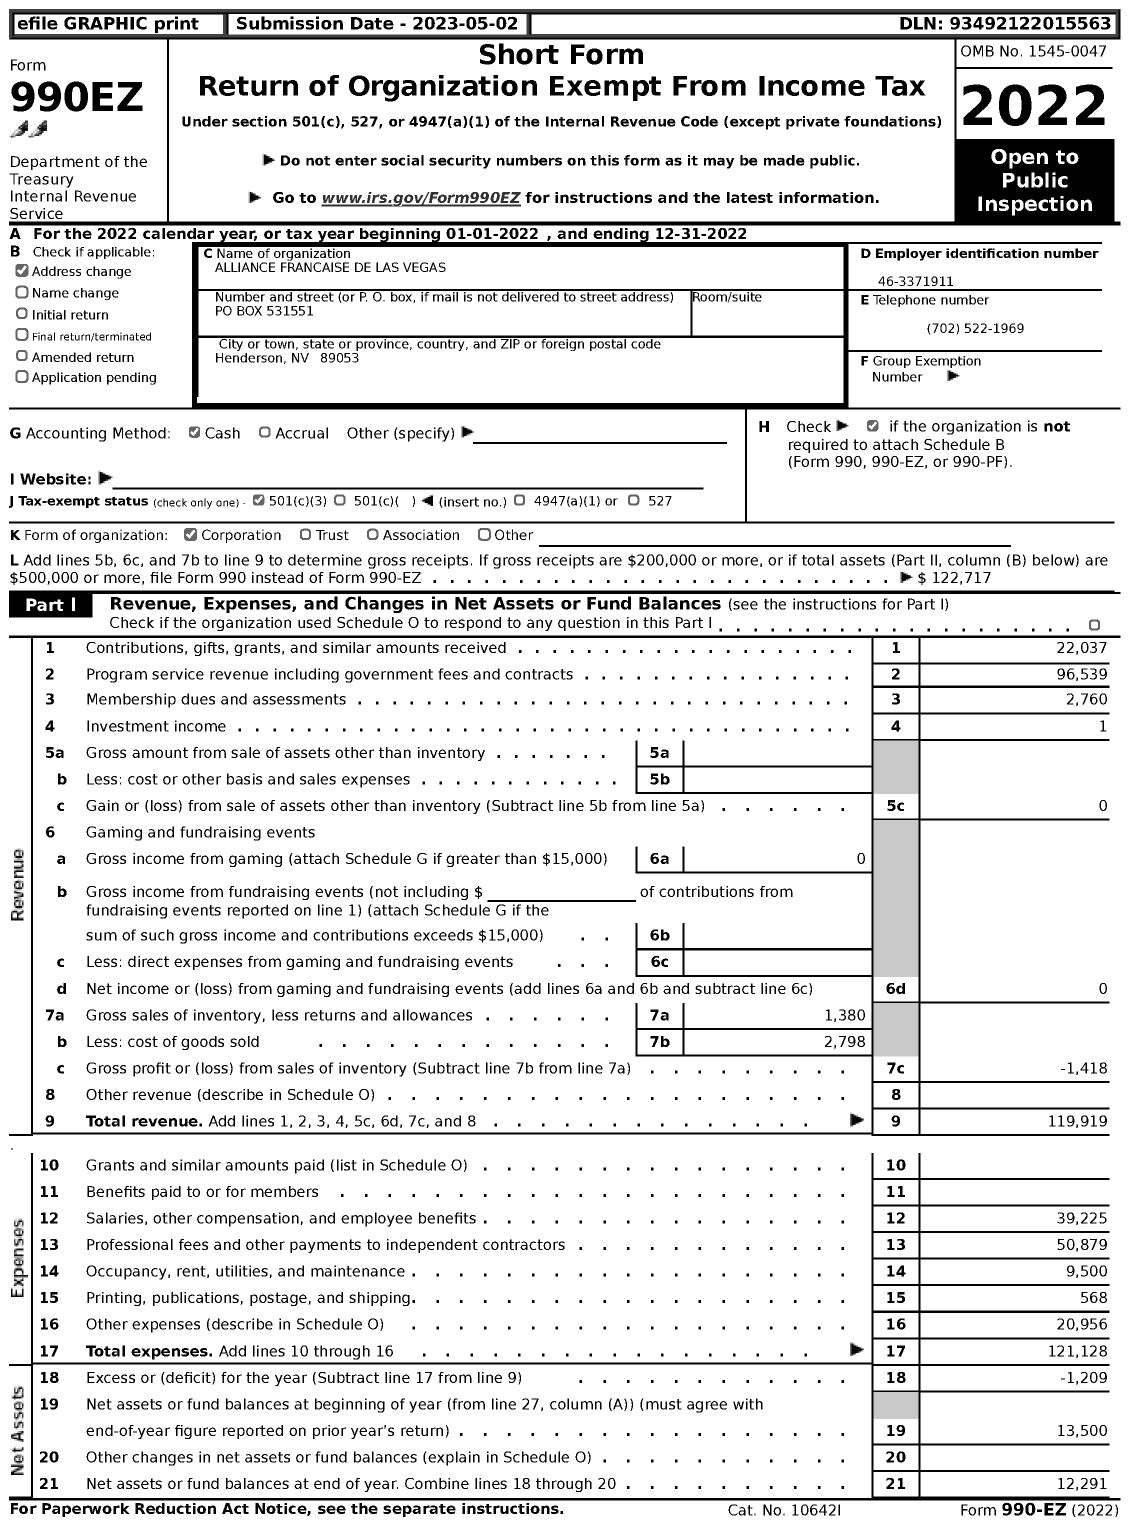 Image of first page of 2022 Form 990EZ for Alliance Francaise de Las Vegas